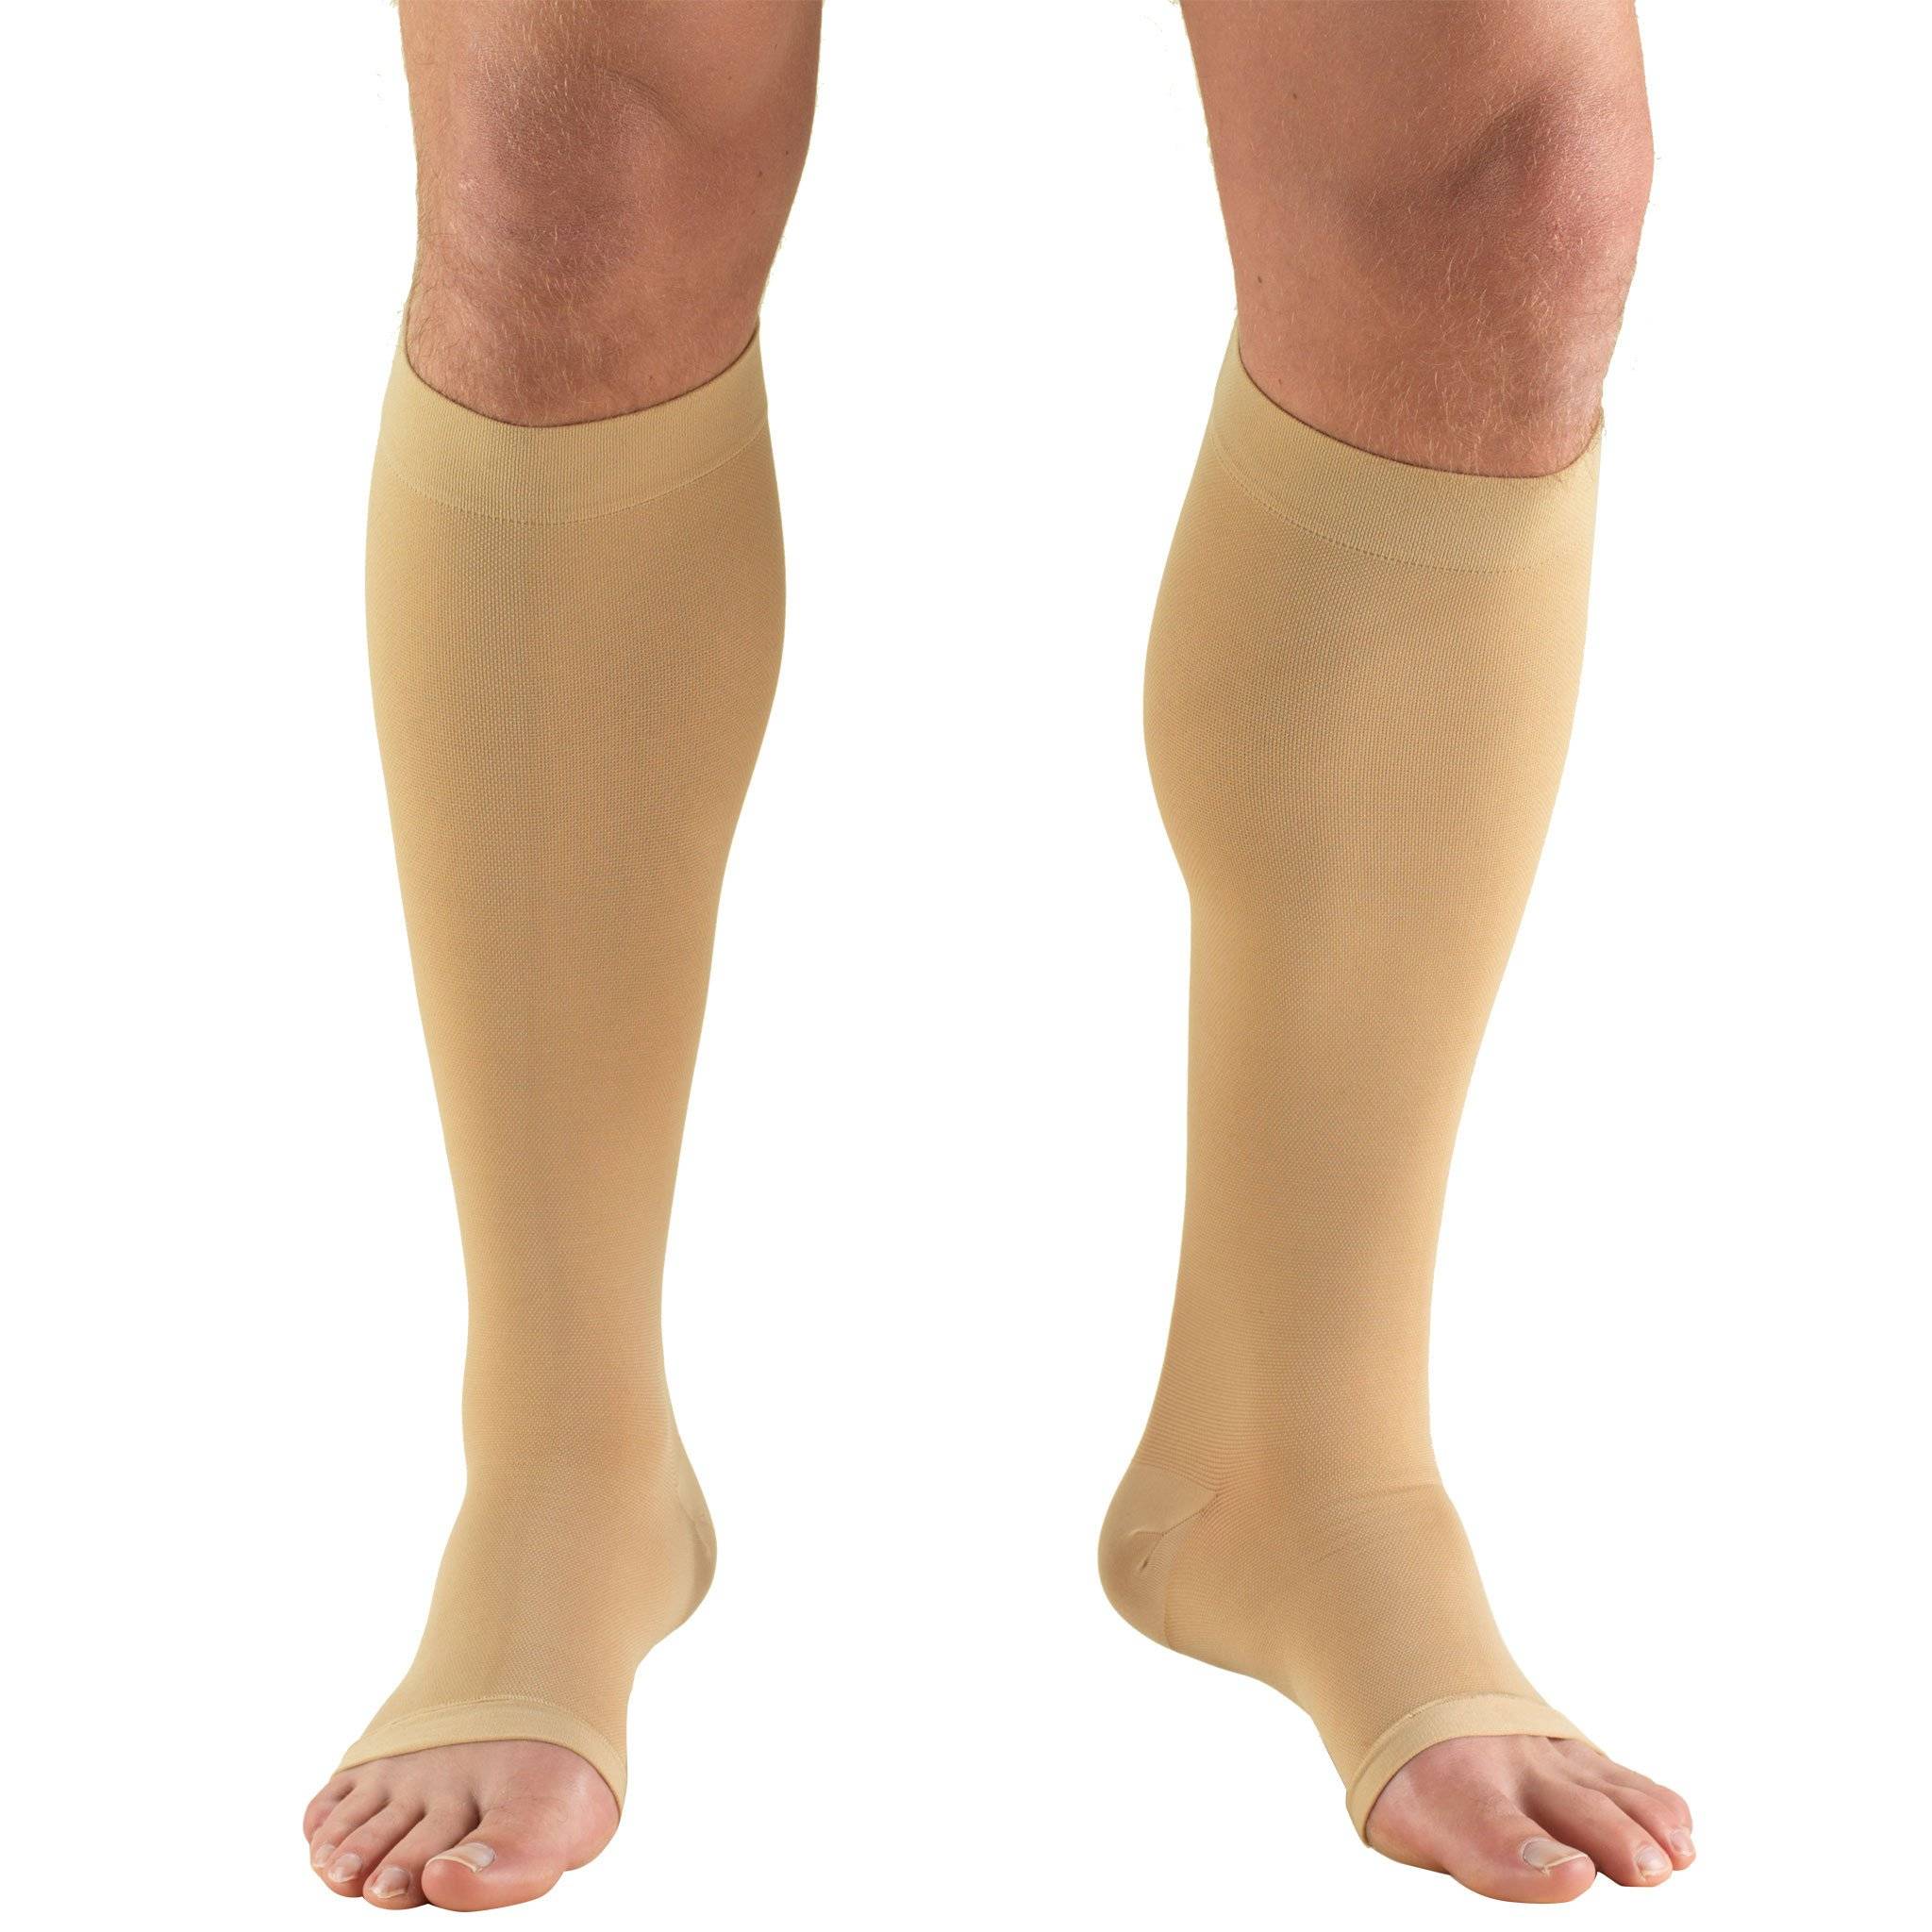 Knee High Open Toe Medical Stockings